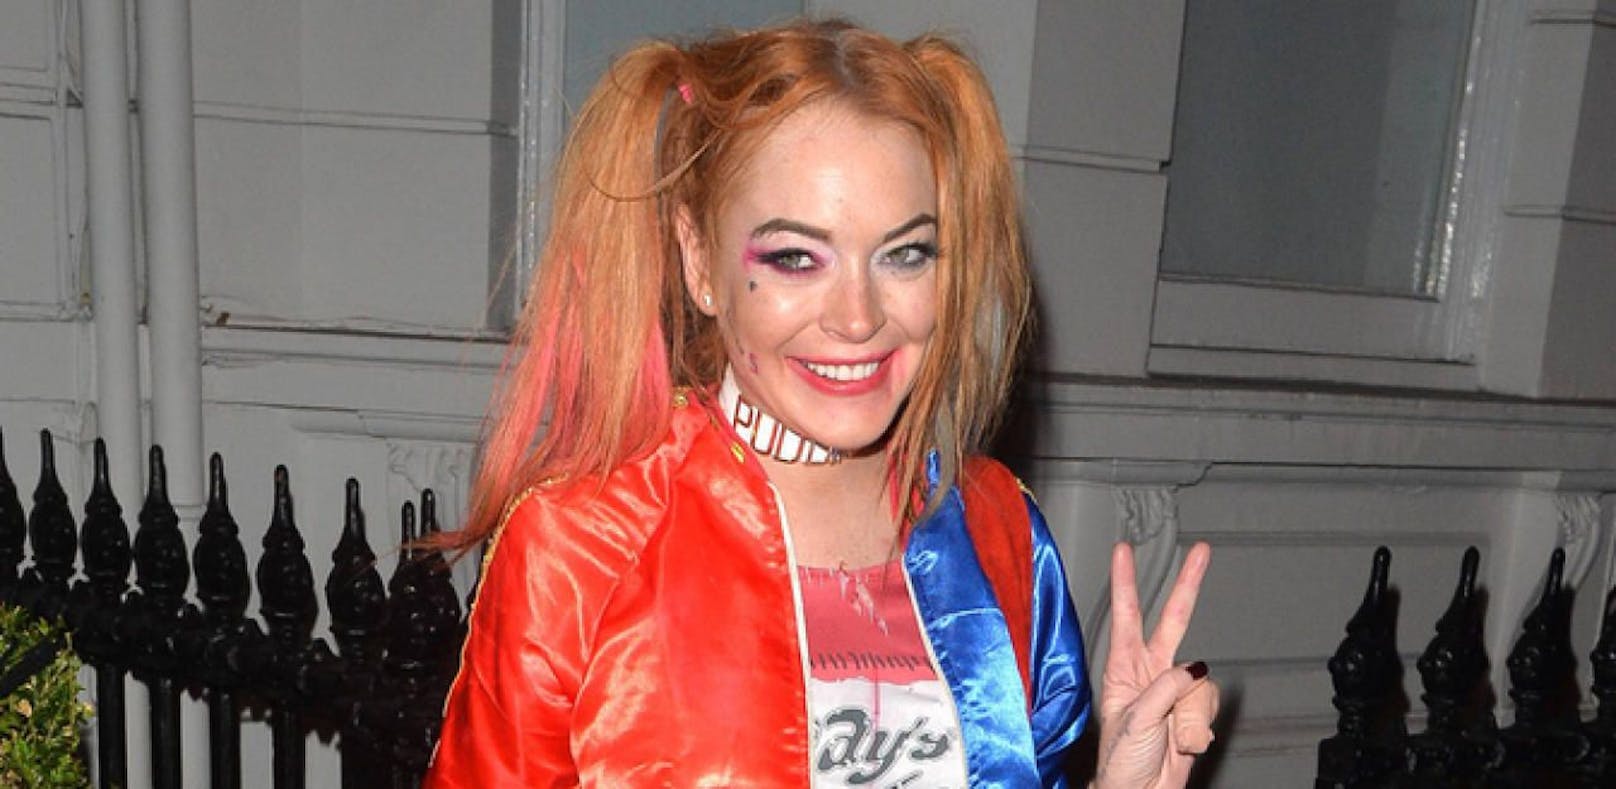 Lindsay Lohan: Karriere als Schmuck-Designerin?